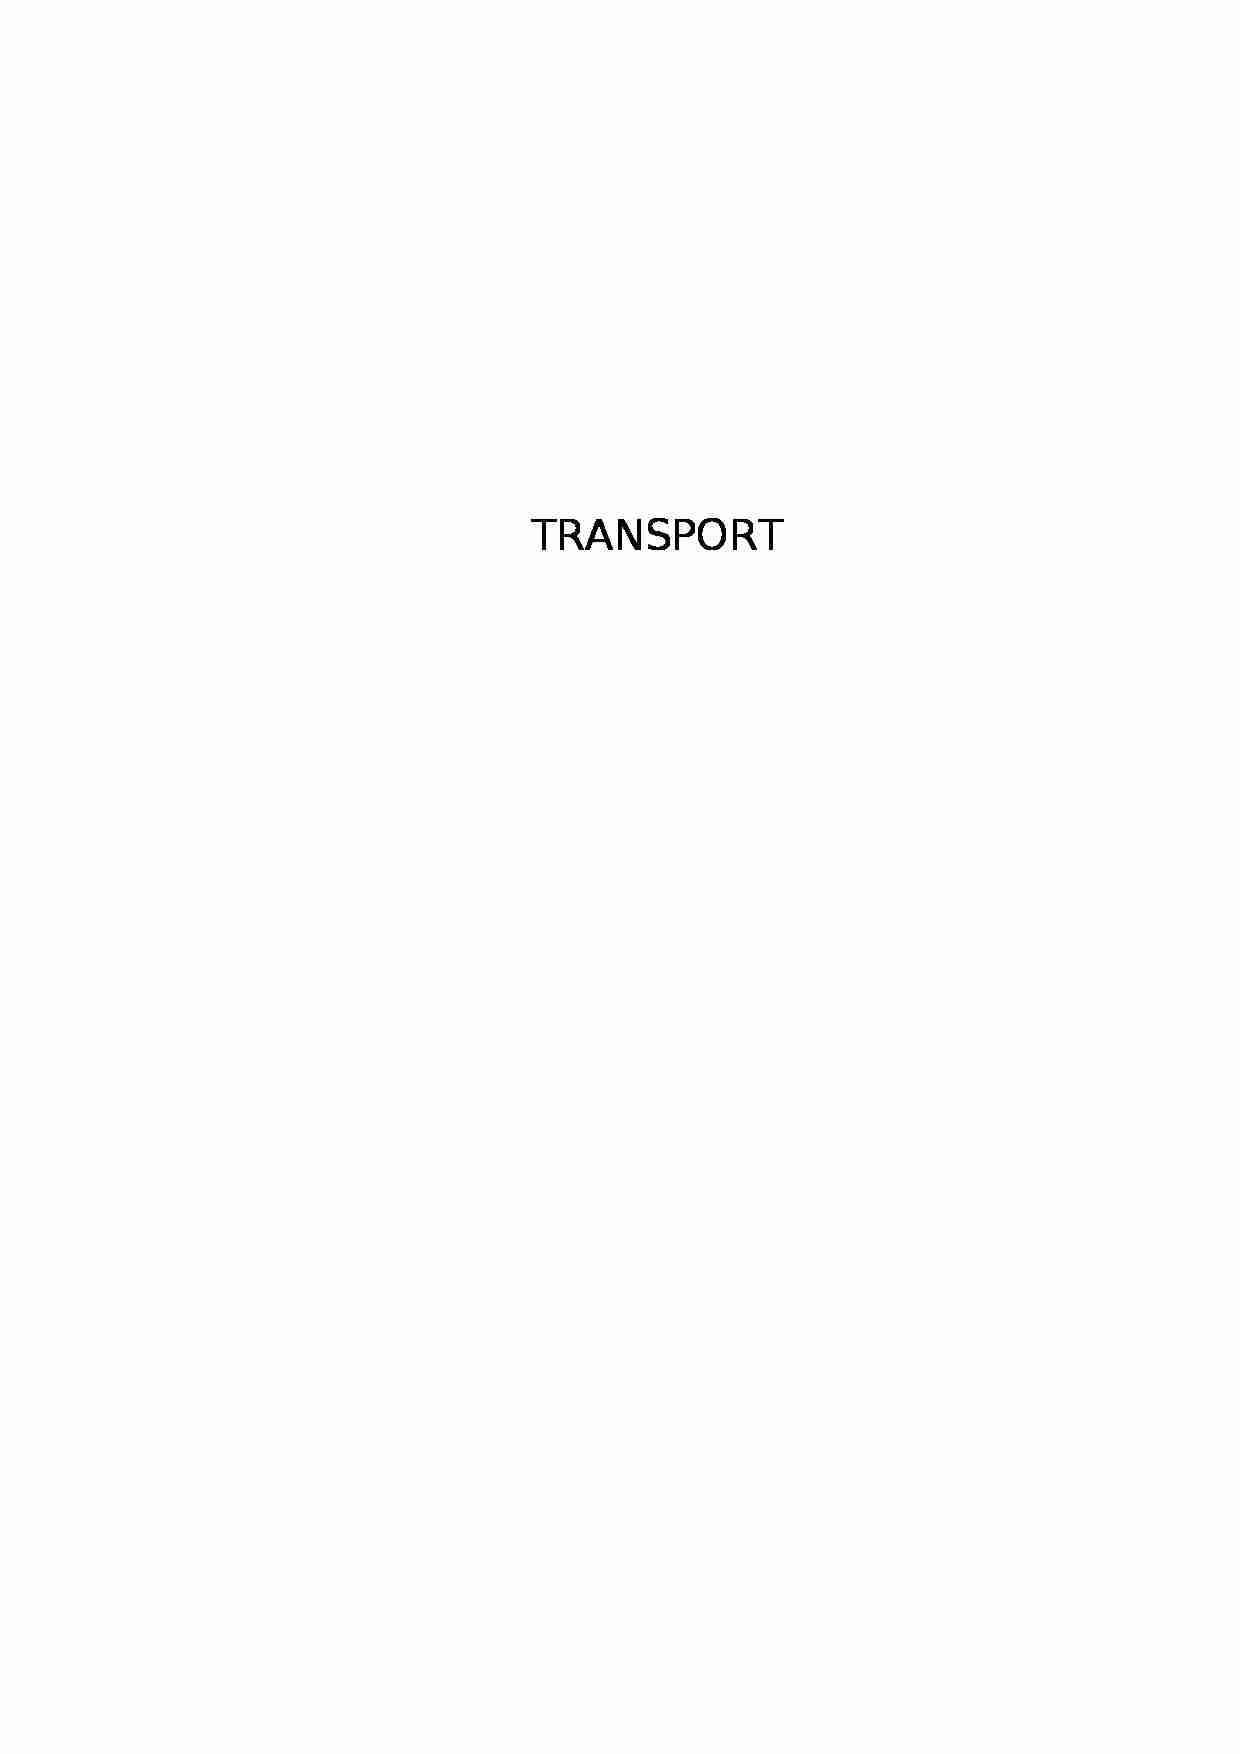 Transport - strona 1